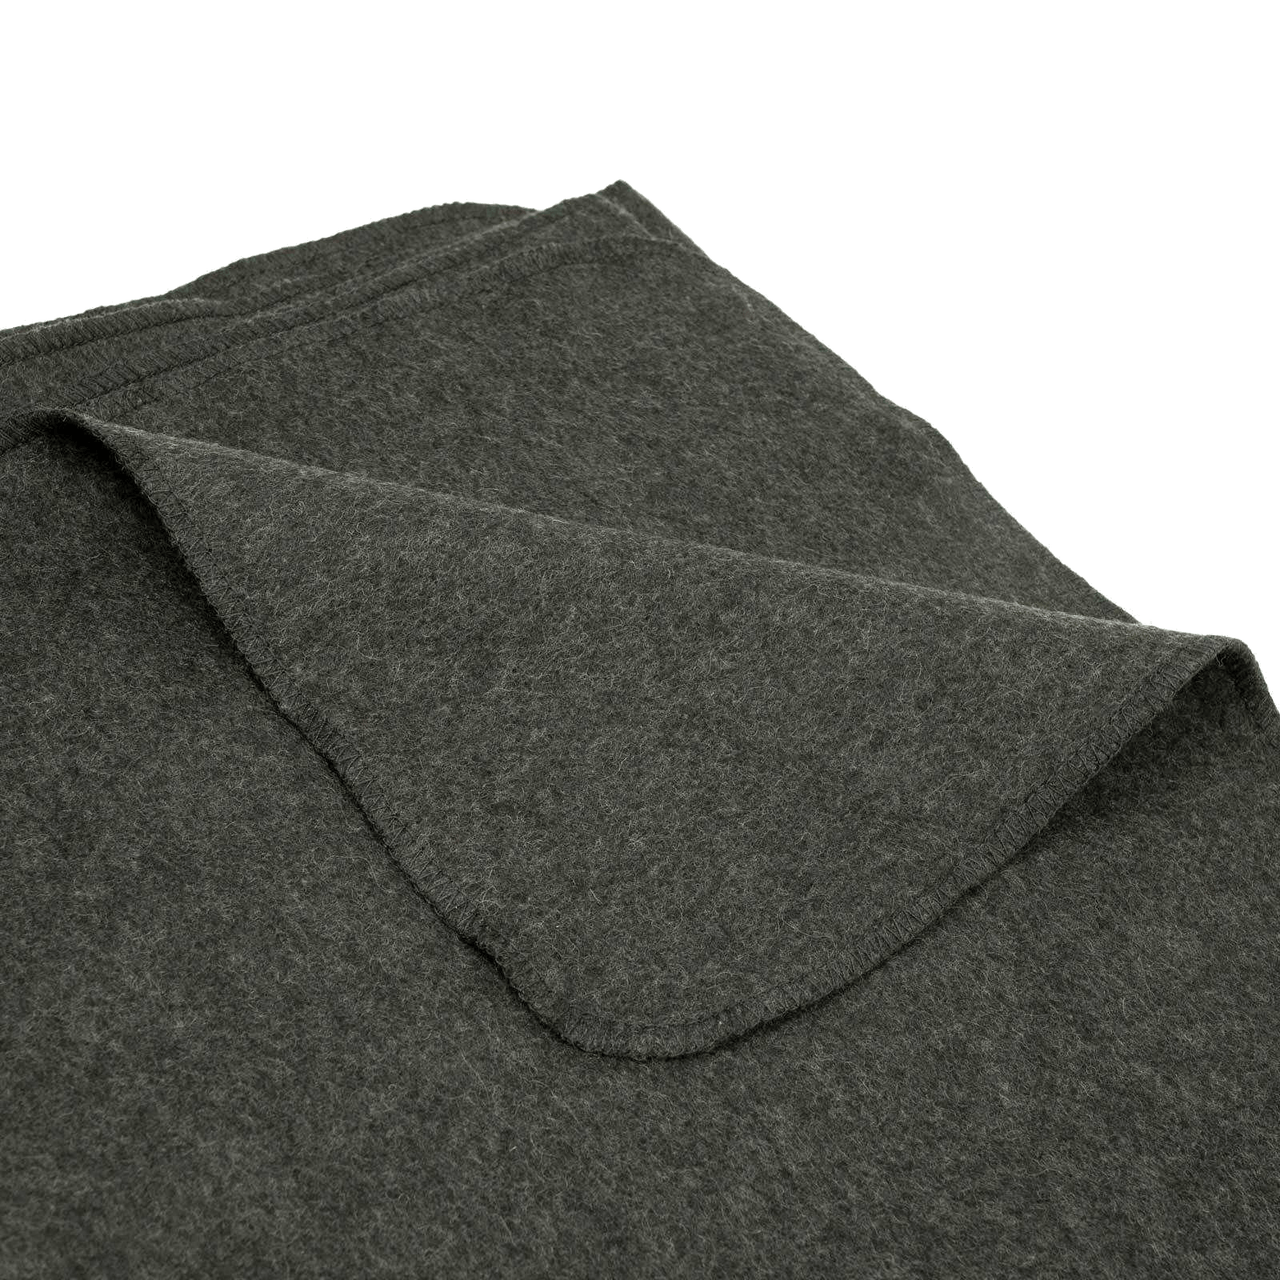 Classic Charcoal Grey 70% Wool Blanket | 62 in x 84 in | GI HAWK